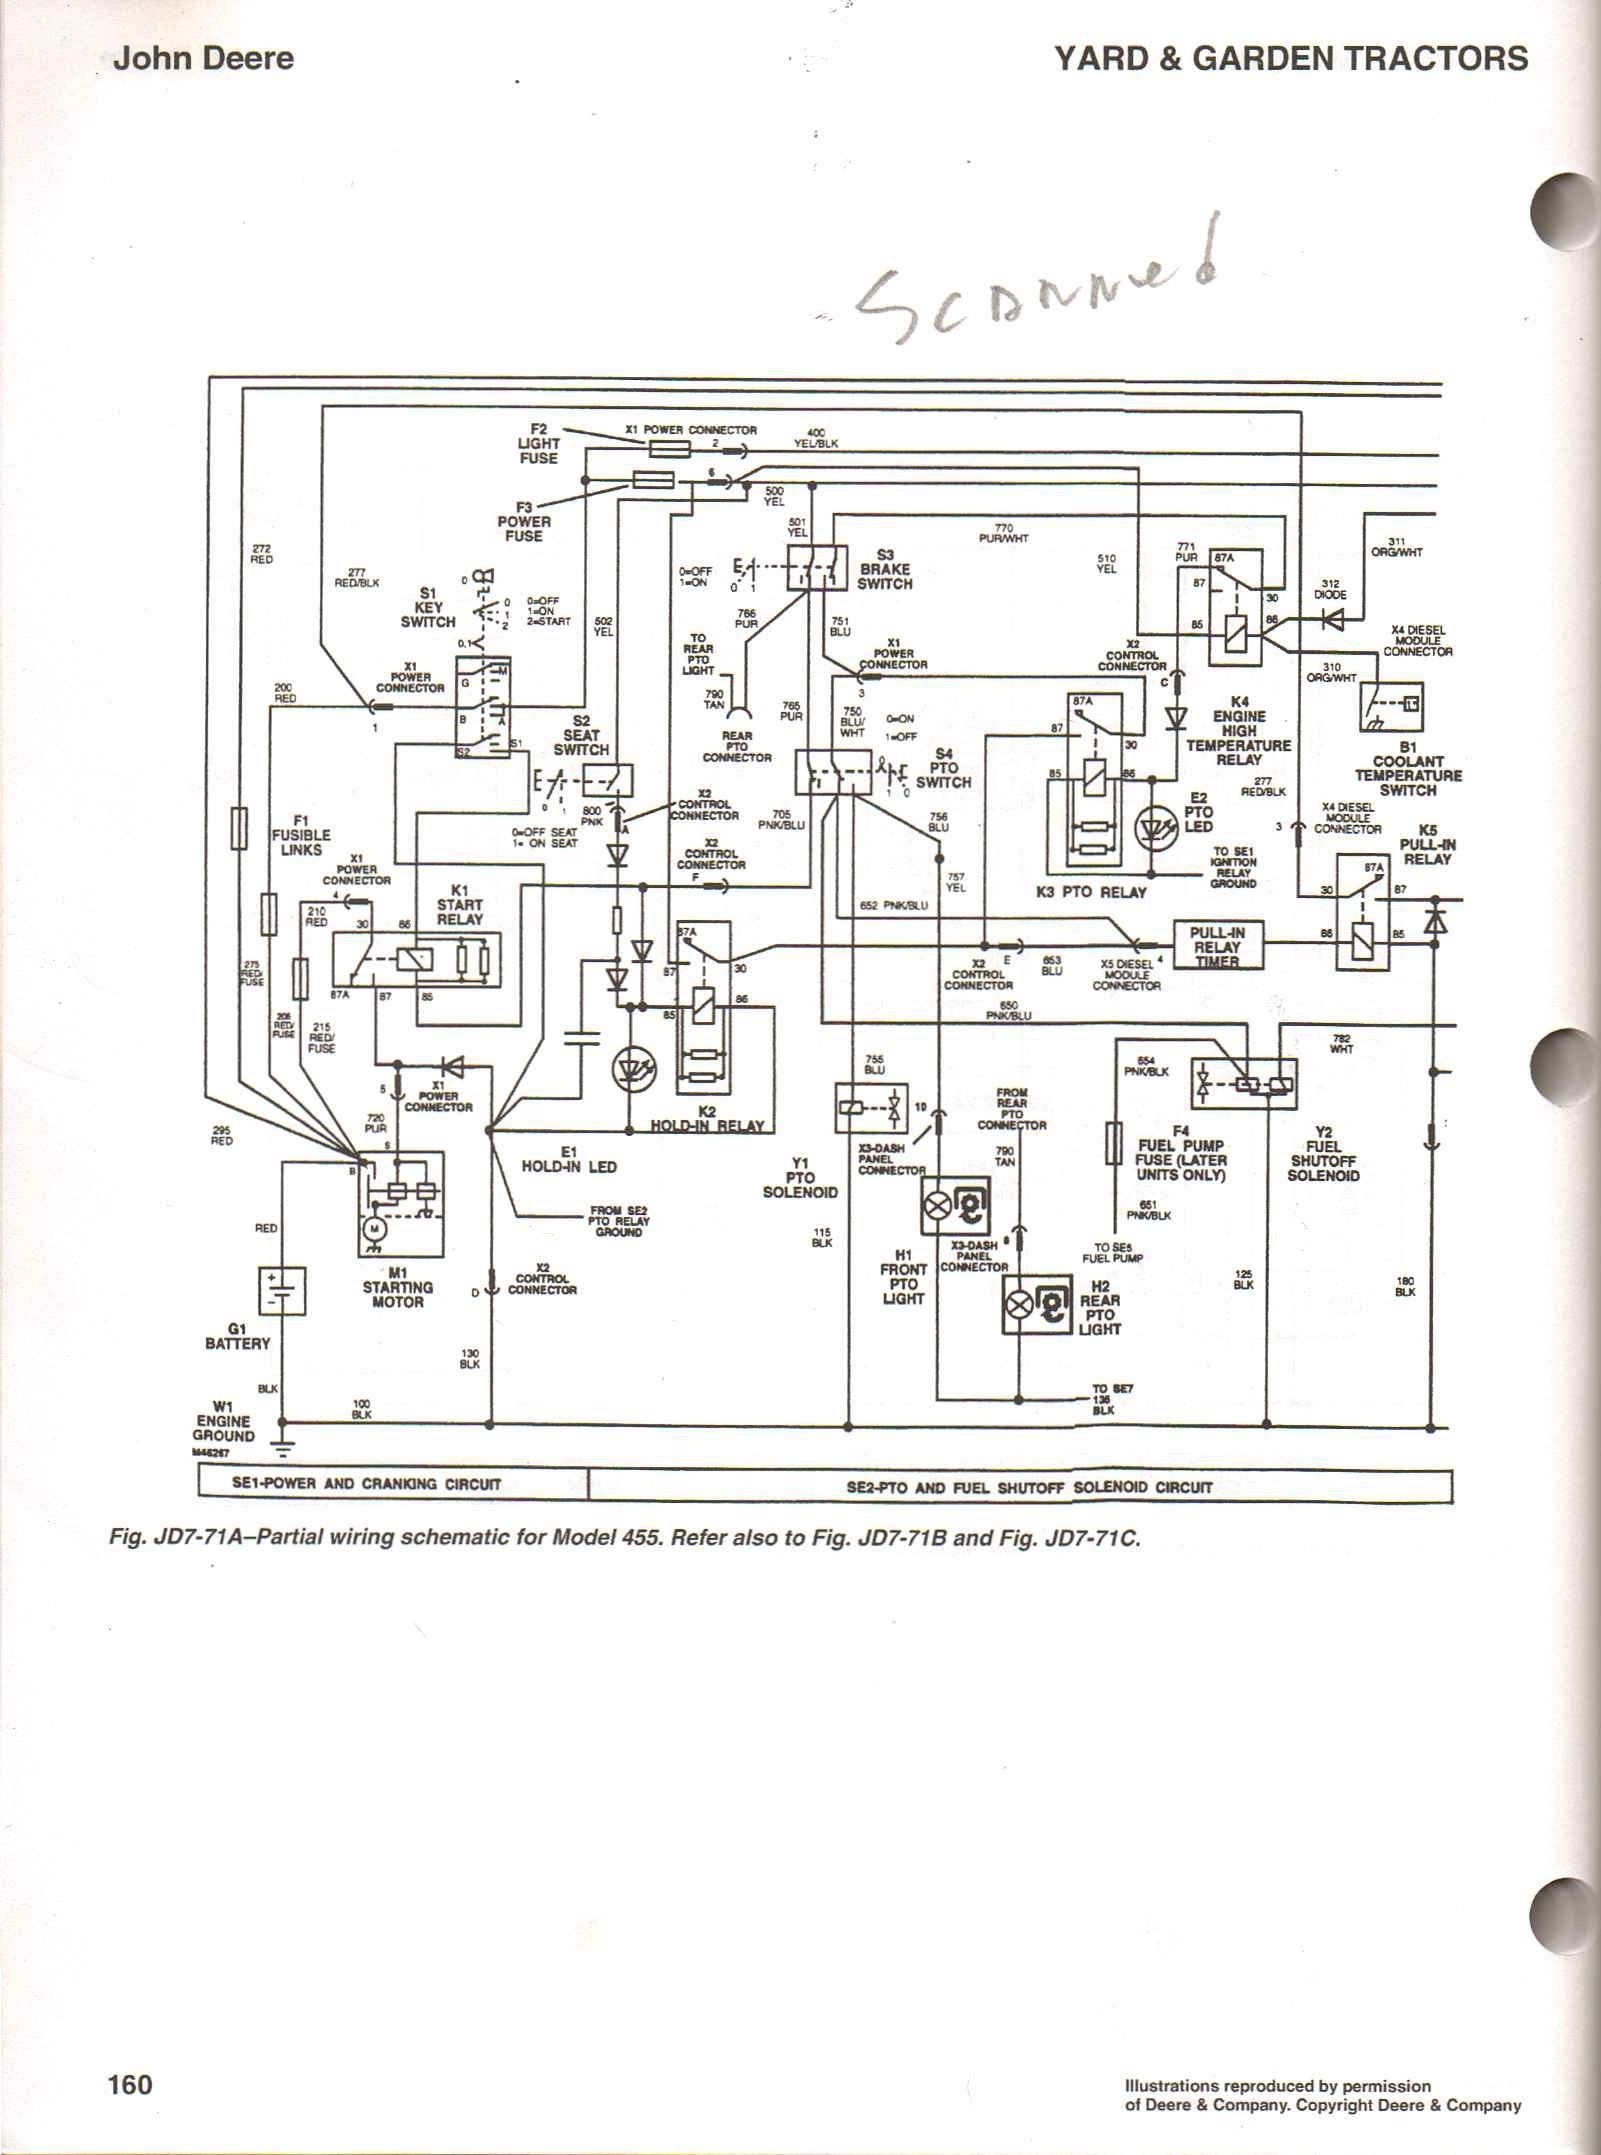 John Deere X530 Wiring Diagram.